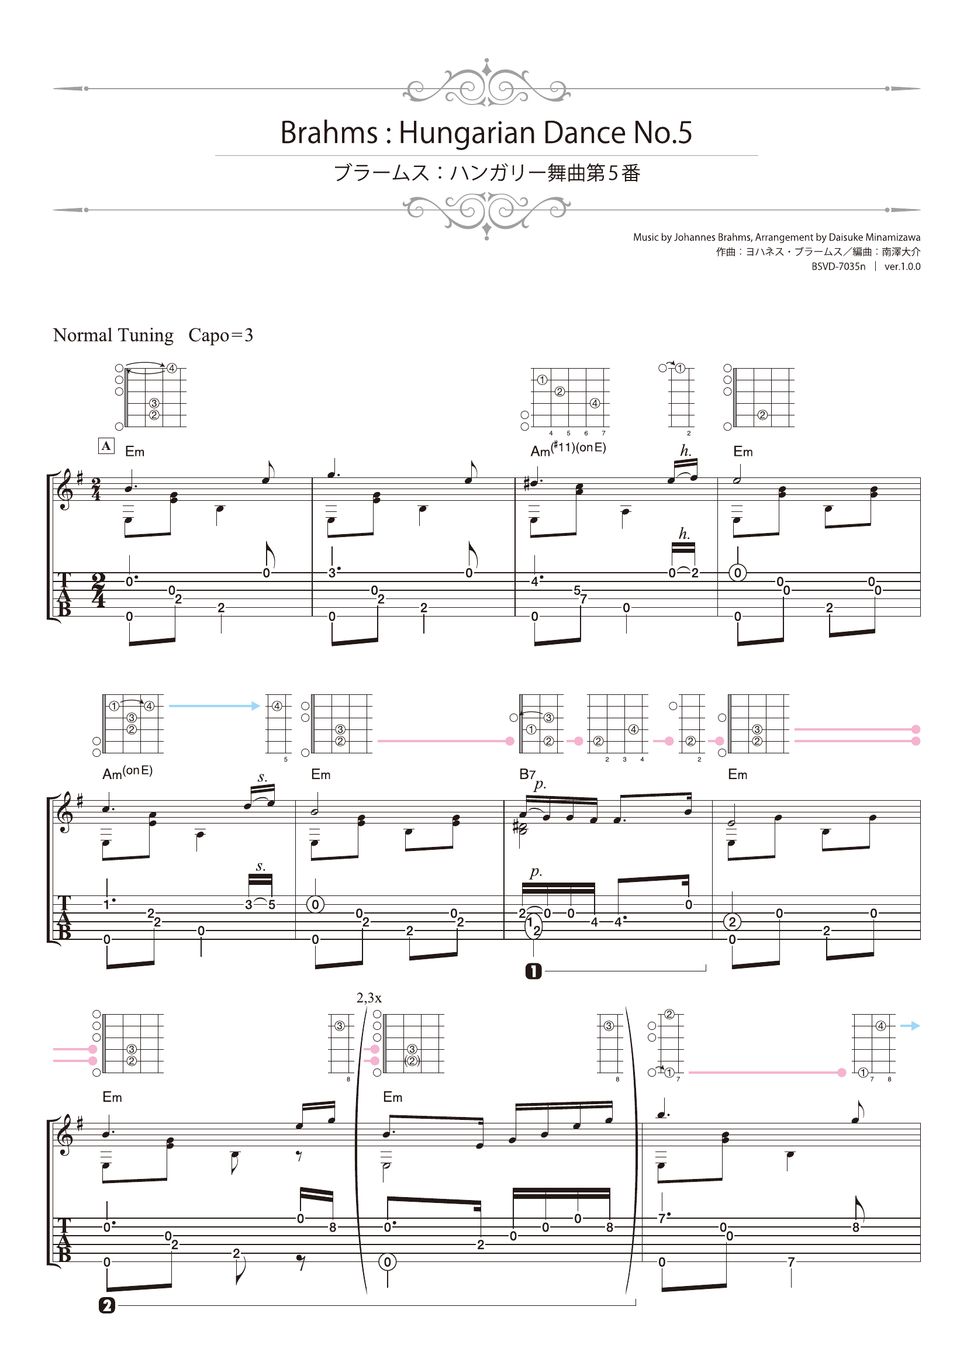 Brahms - Hungarian Dance No.5 (Solo Guitar) by Daisuke Minamizawa